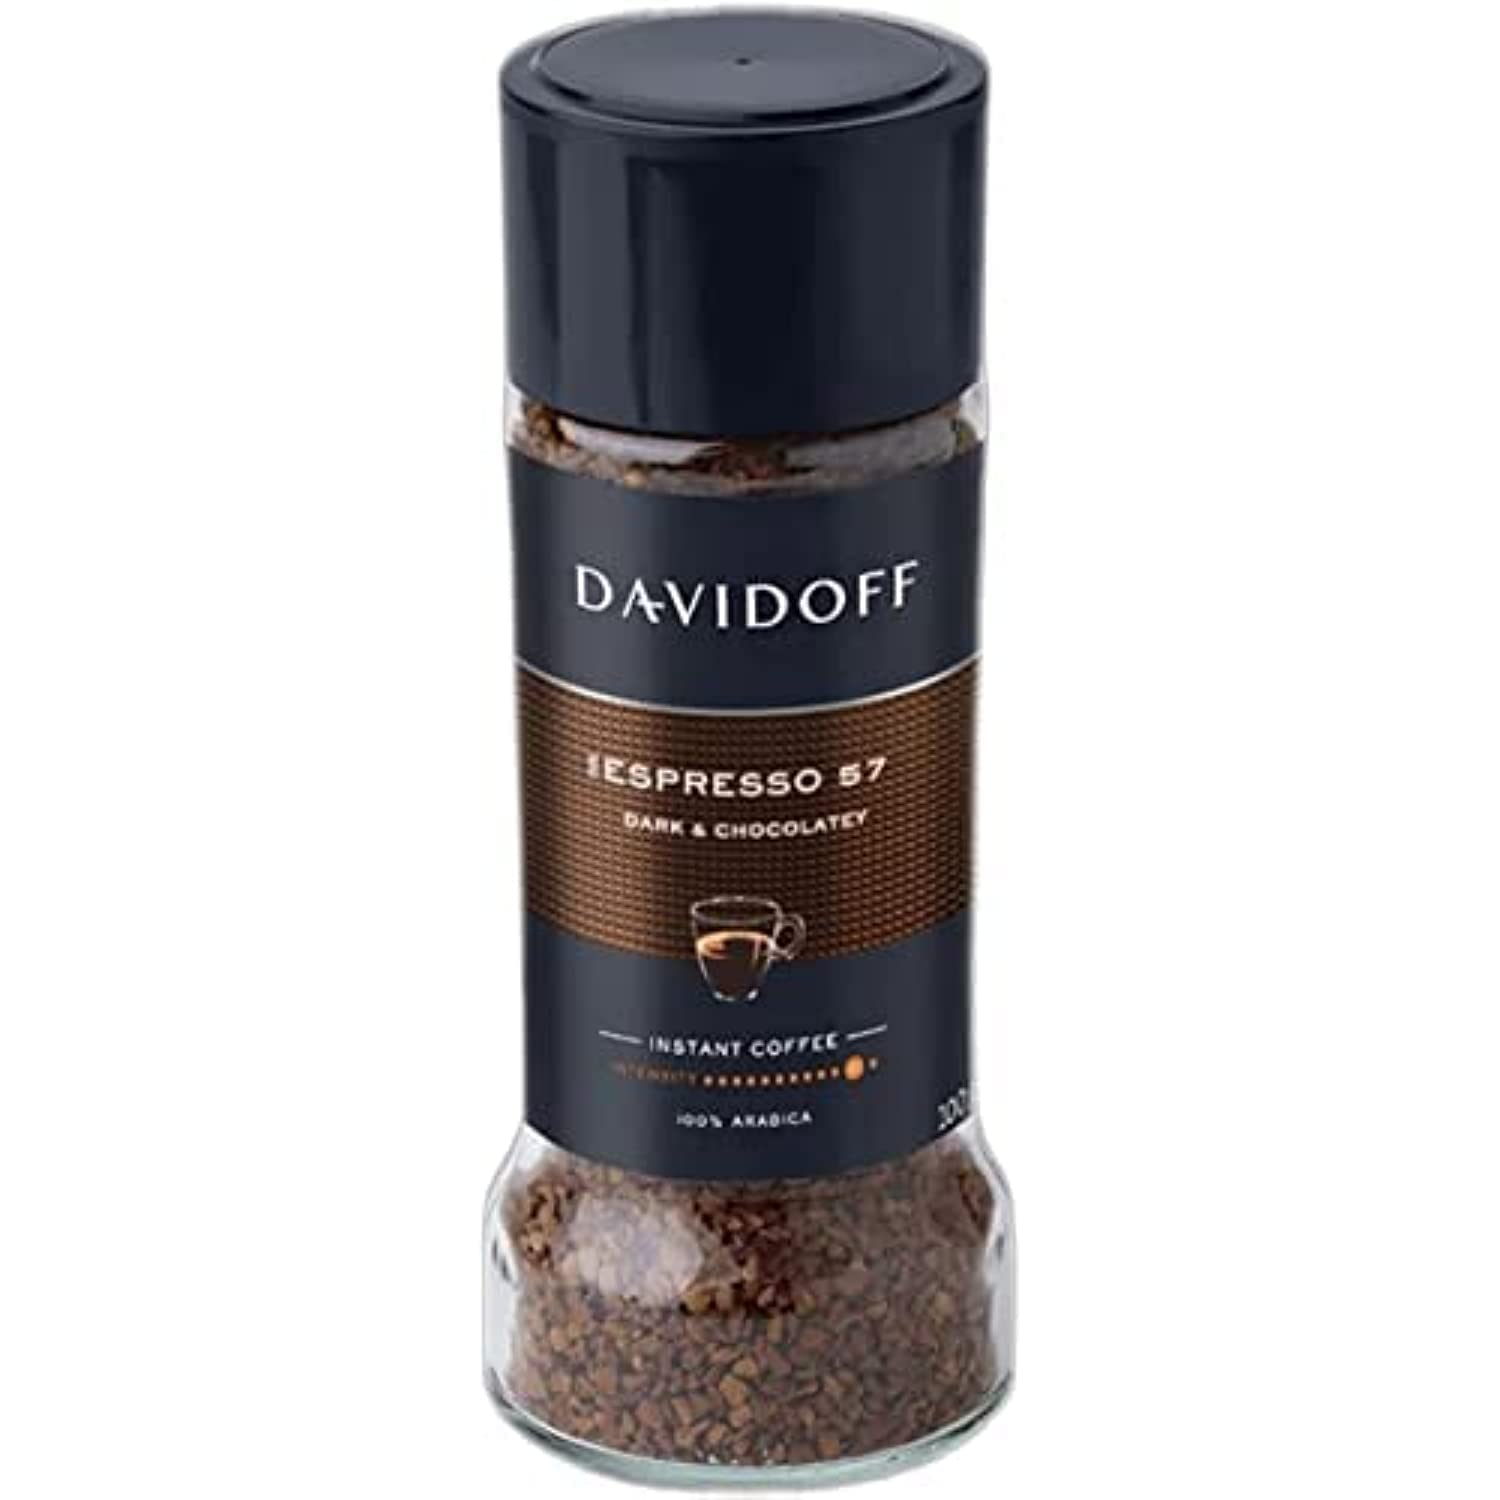 davidoff-espresso-57